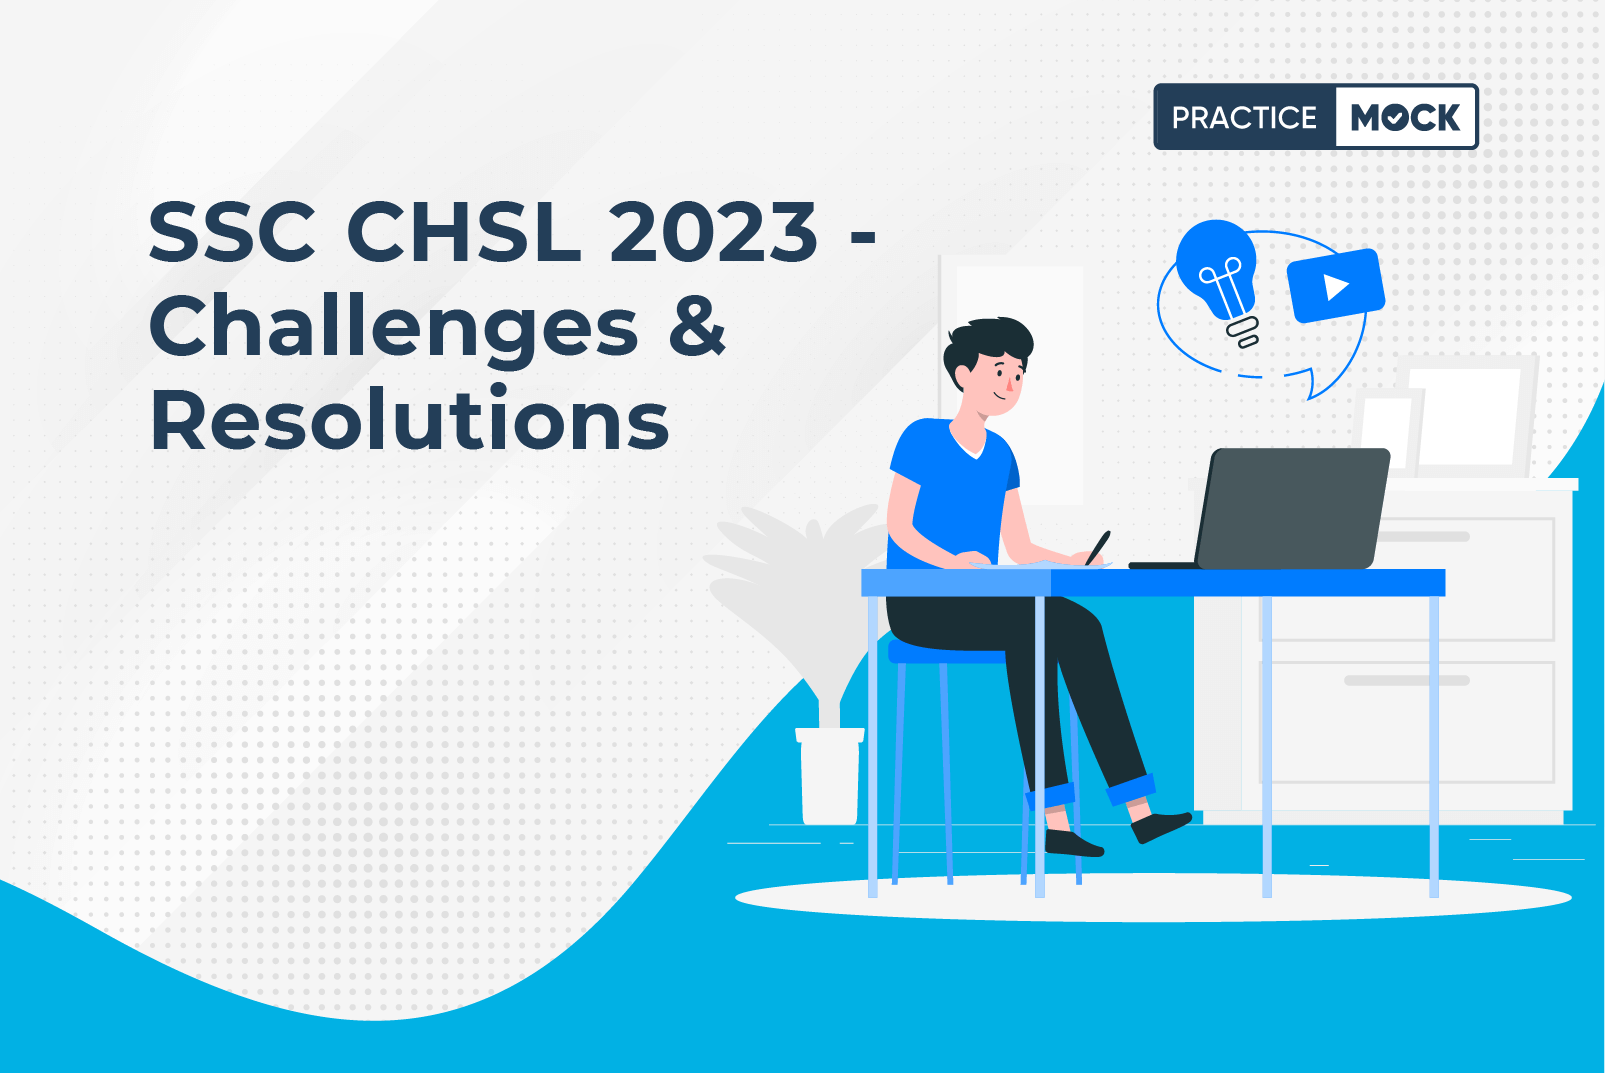 SSC CHSL 2023 - 10 Challenges & Resolutions